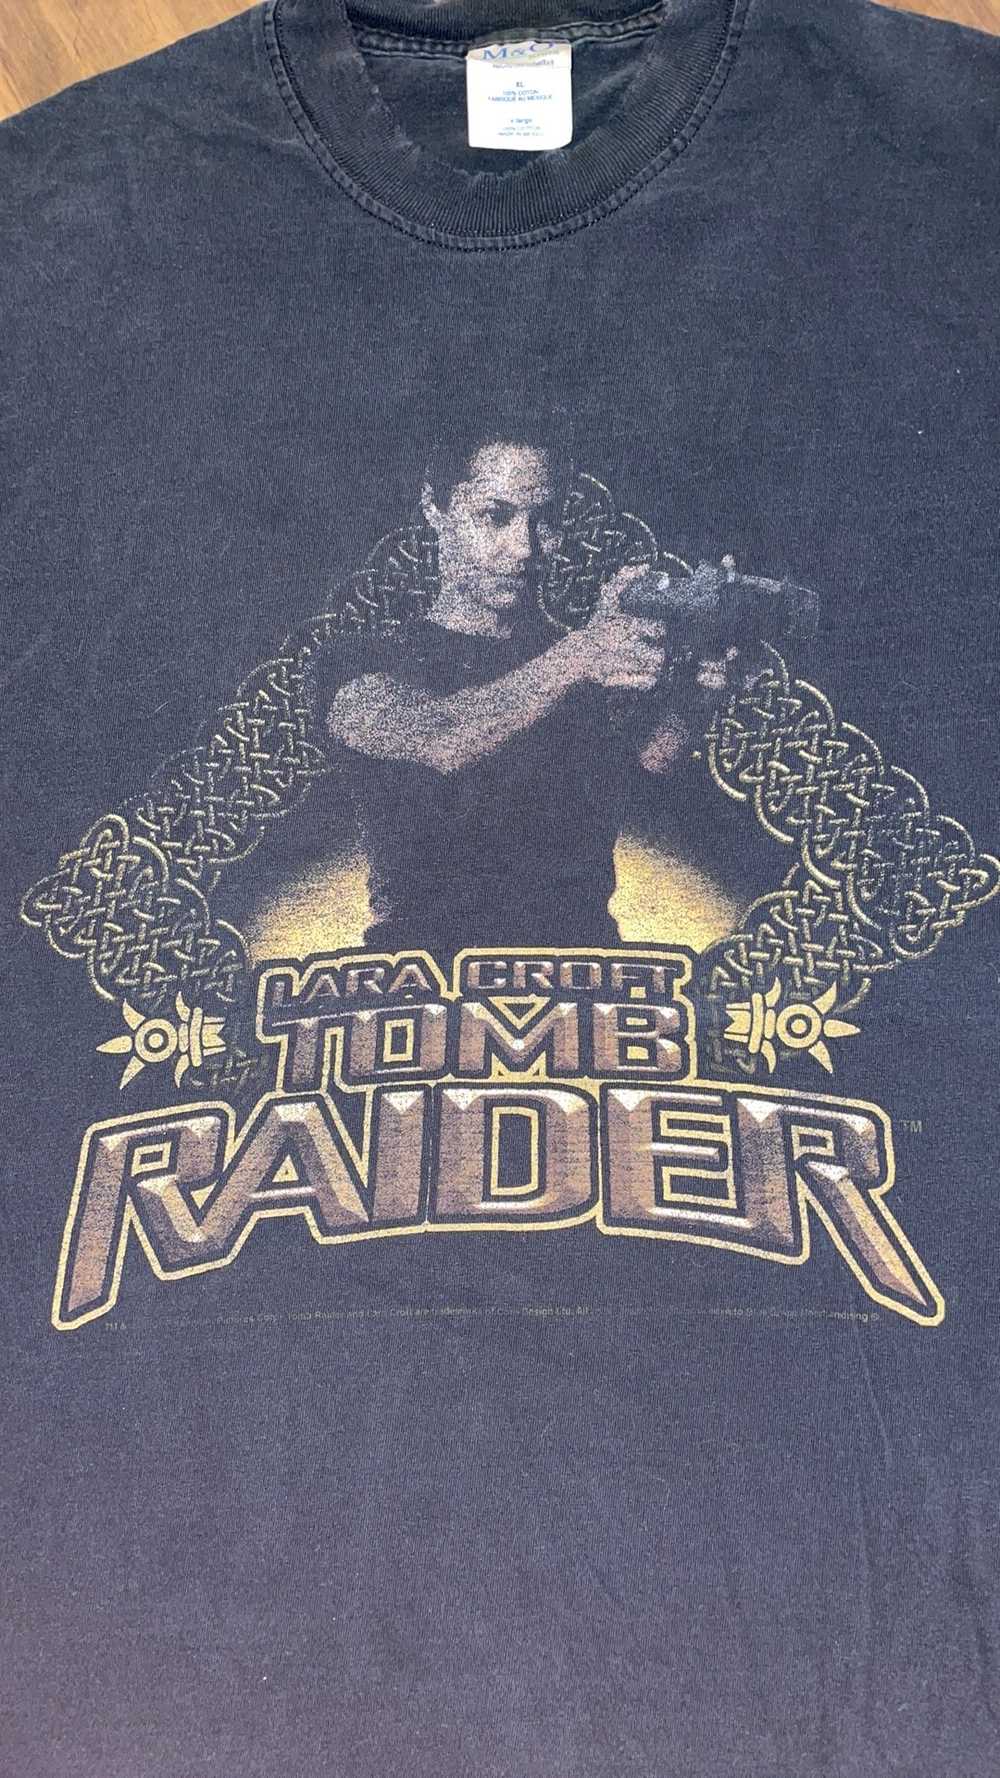 Vintage Lara Croft Tomb Raider Movie Shirt - image 2